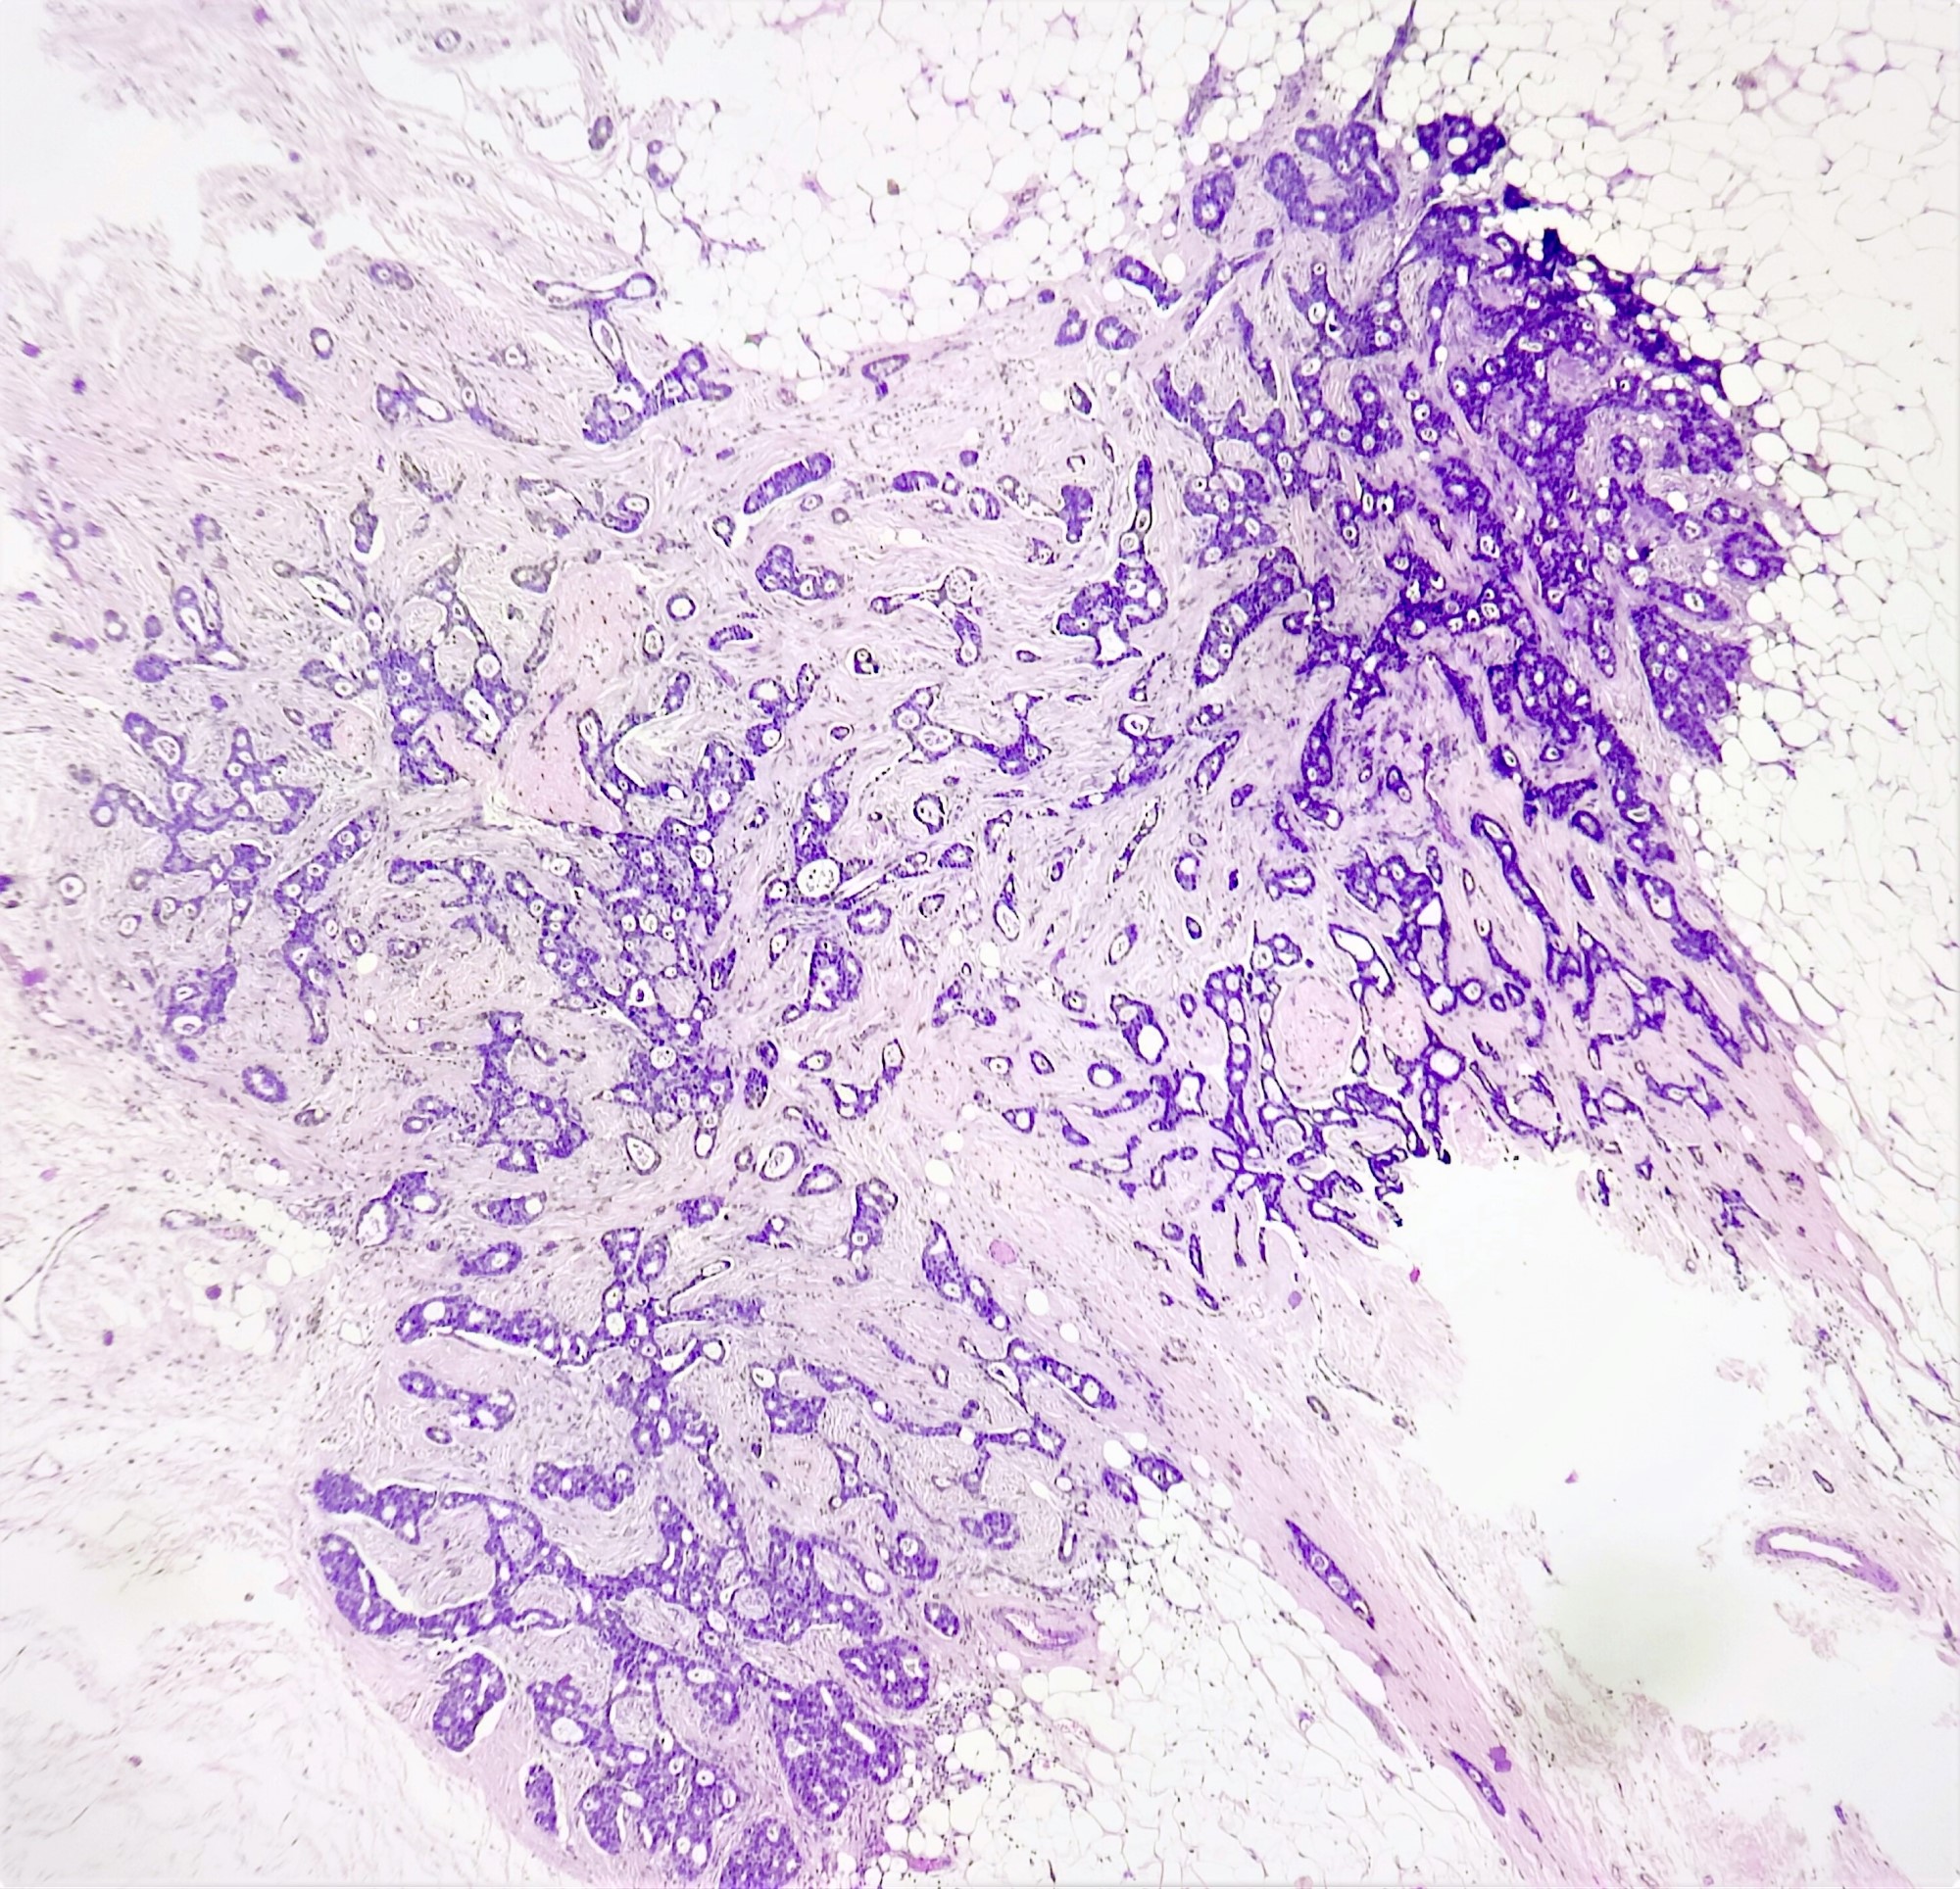 Invasive cribriform carcinoma